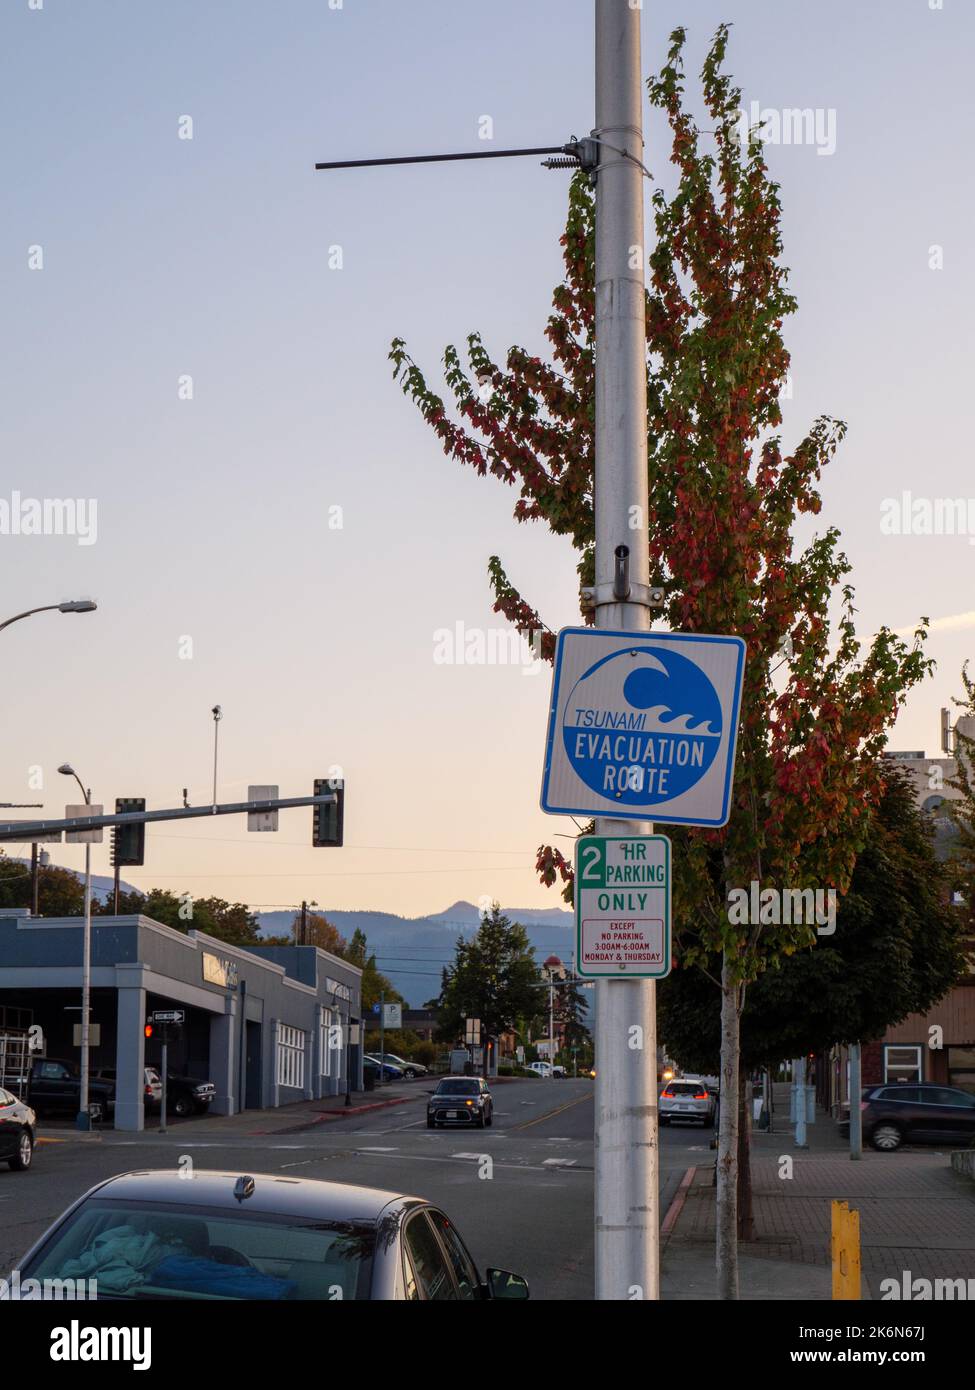 Tsunami evacuation route sign, Port Angeles, Washington Stock Photo